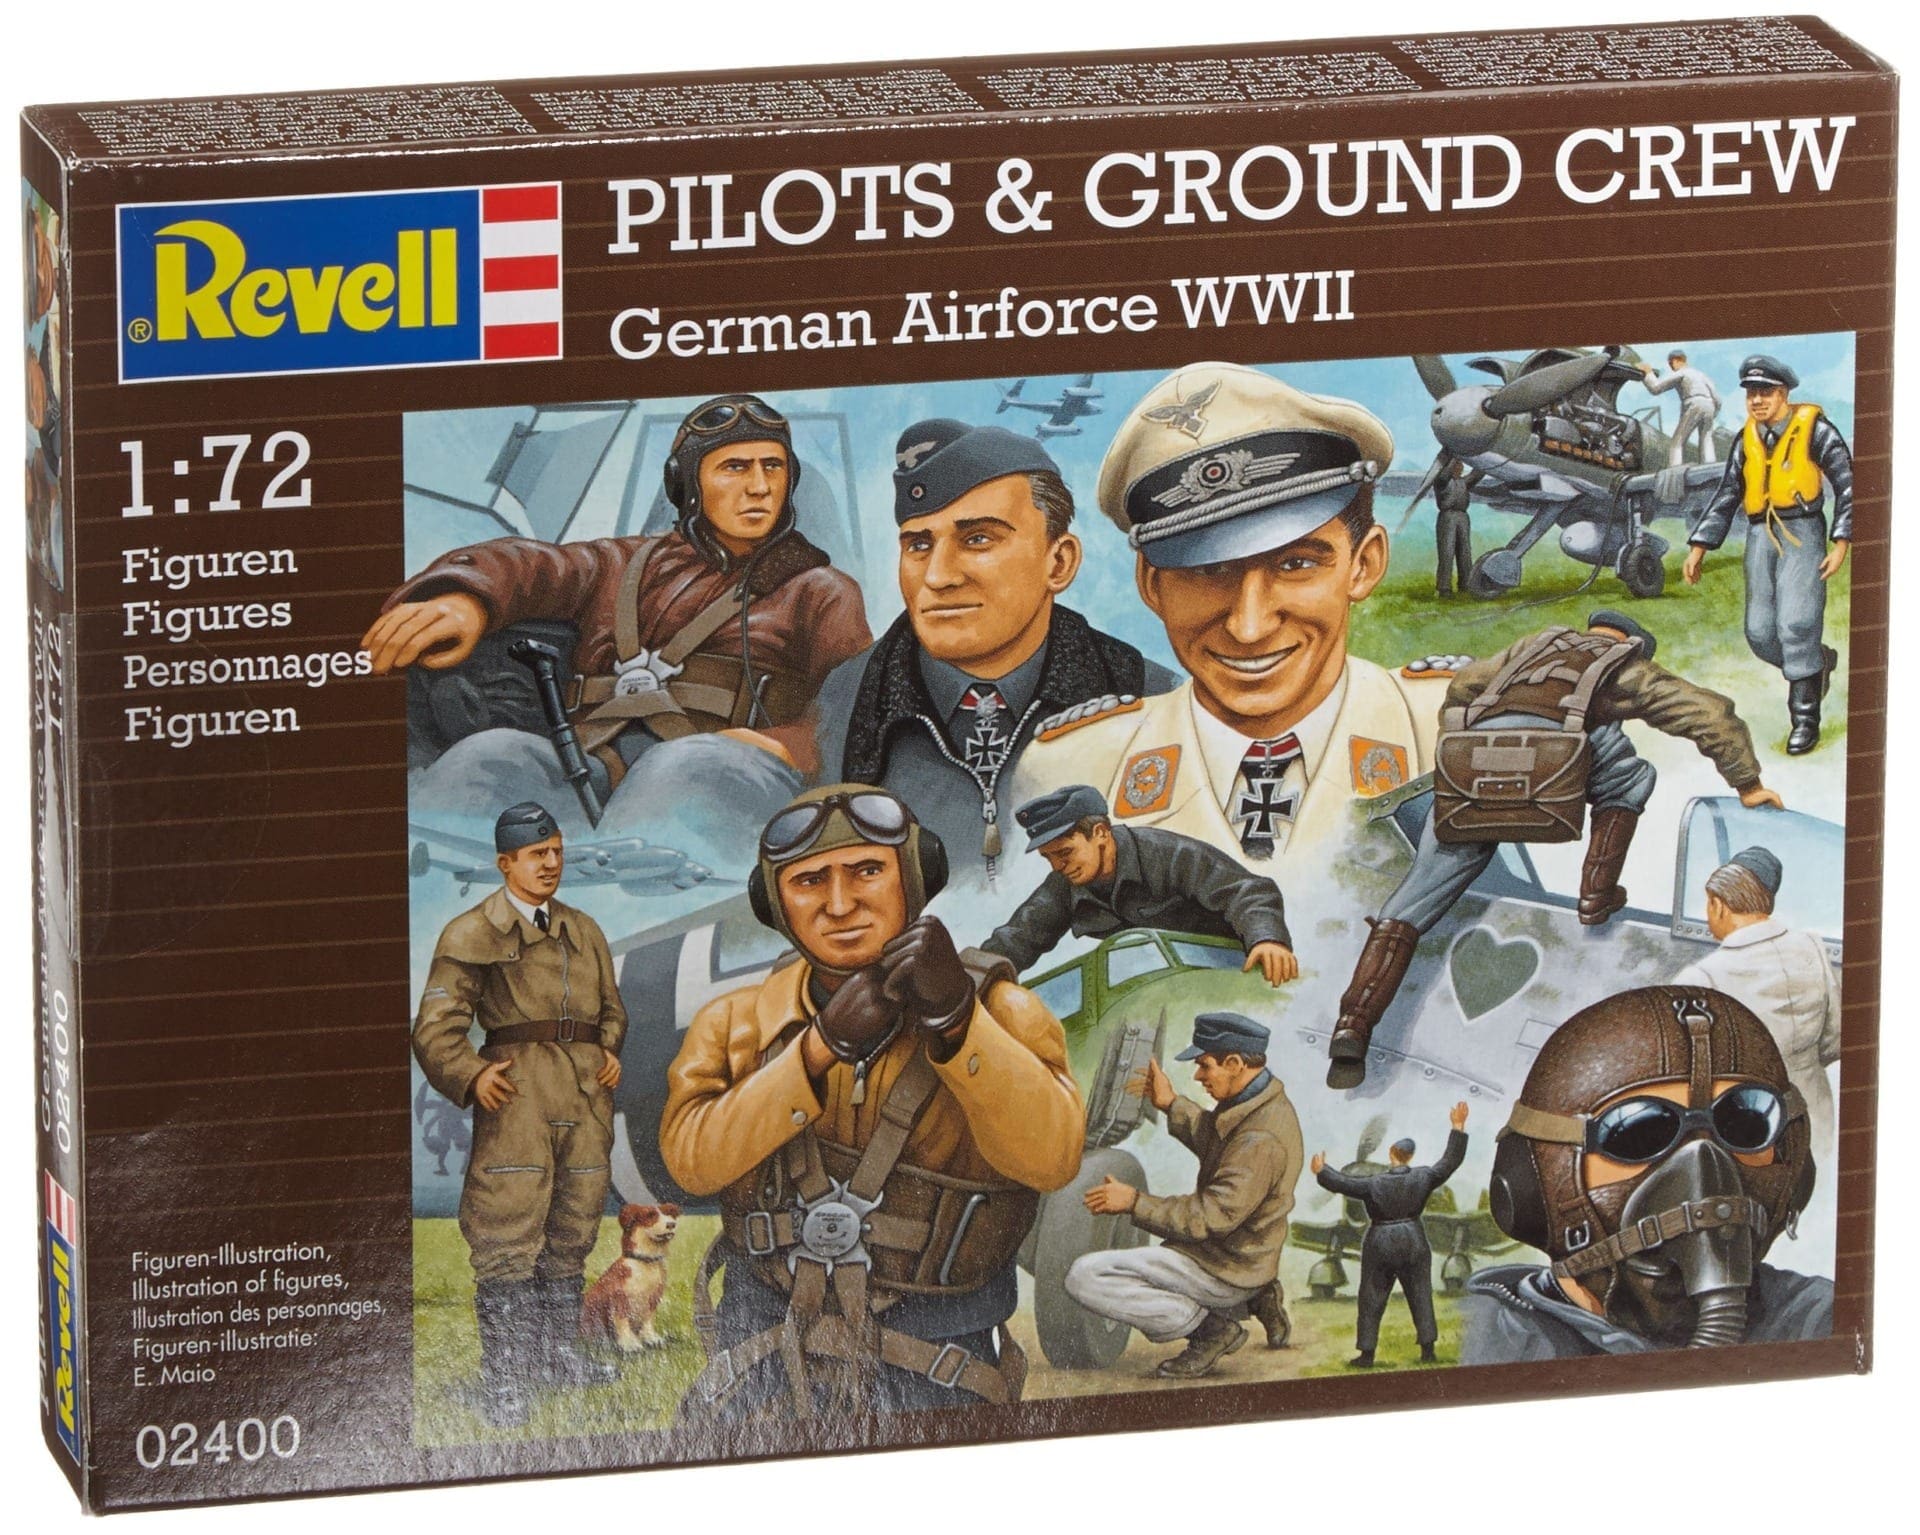 Graeme revell 3. Фигурка летчика 1/72. Revell немецкие солдаты. Revell "пилоты и наземная команда британских ВВС". Фигуры пилотов 1/72.